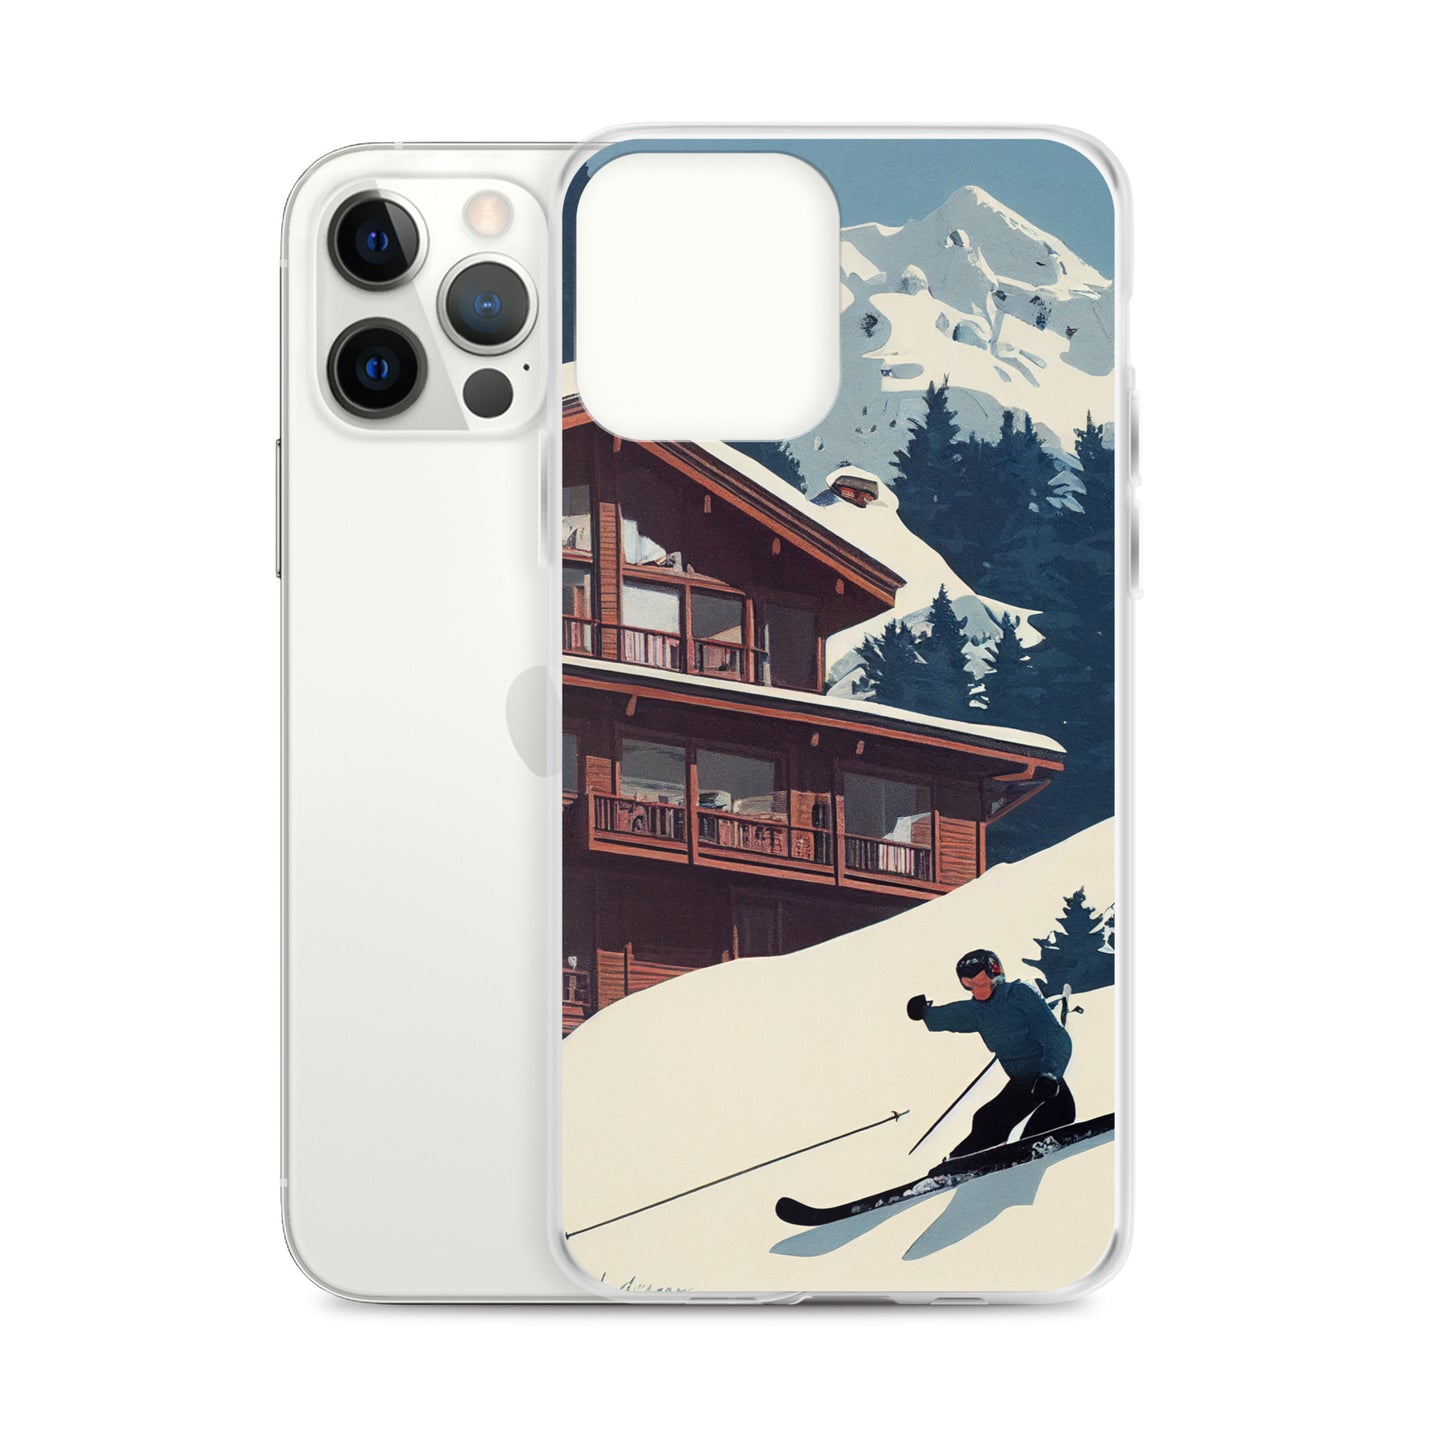 iPhone Case - Vintage Adverts - Ski Chalet